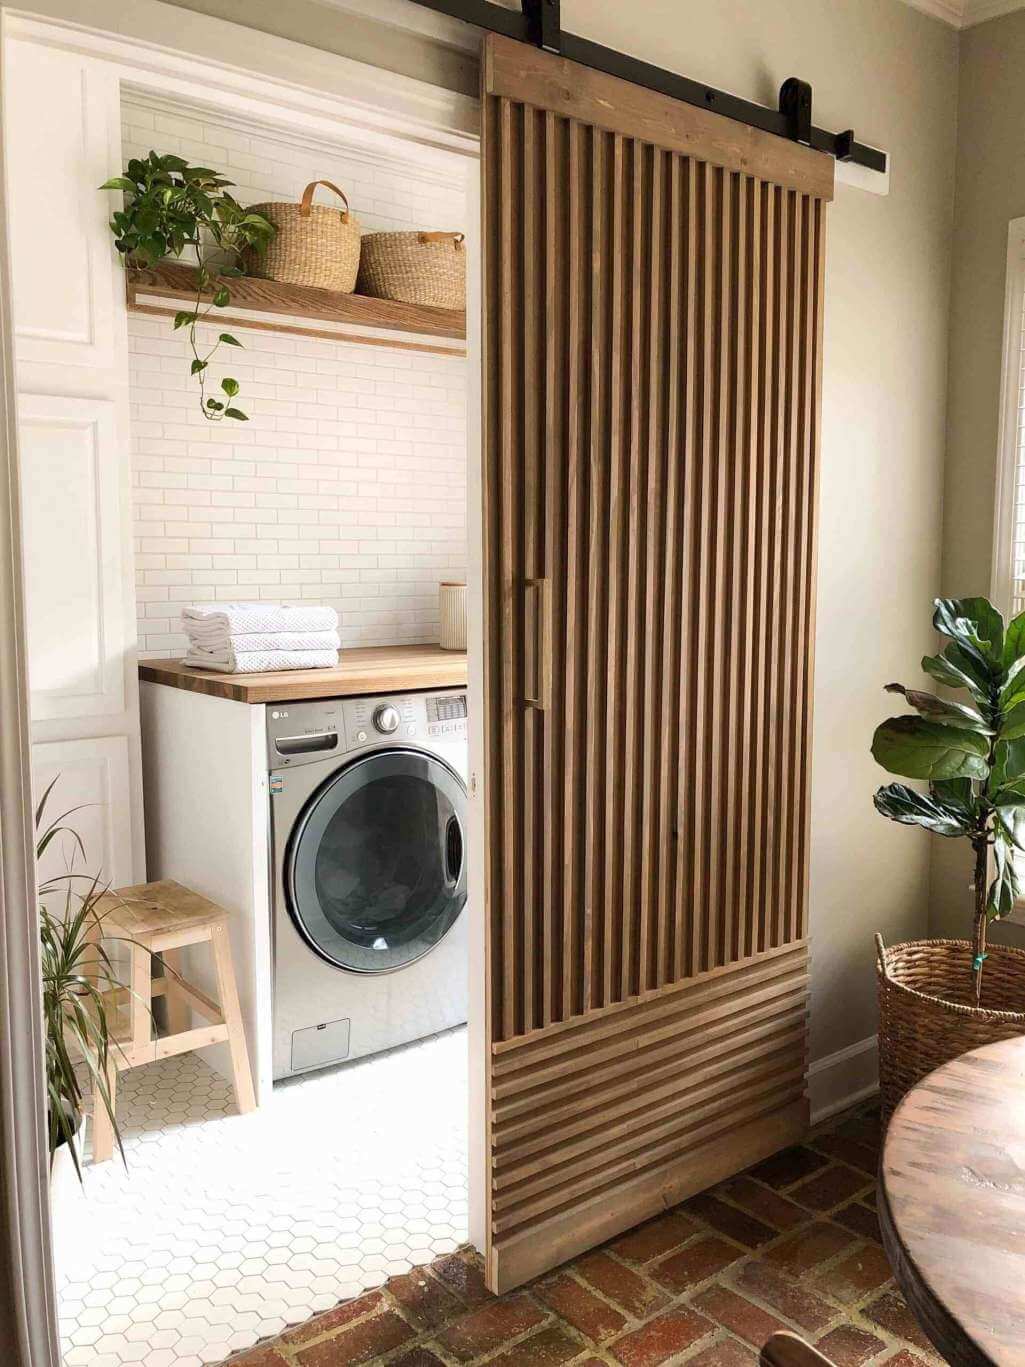 Laundry Room With Pocket Doors - Ideas Home Interior